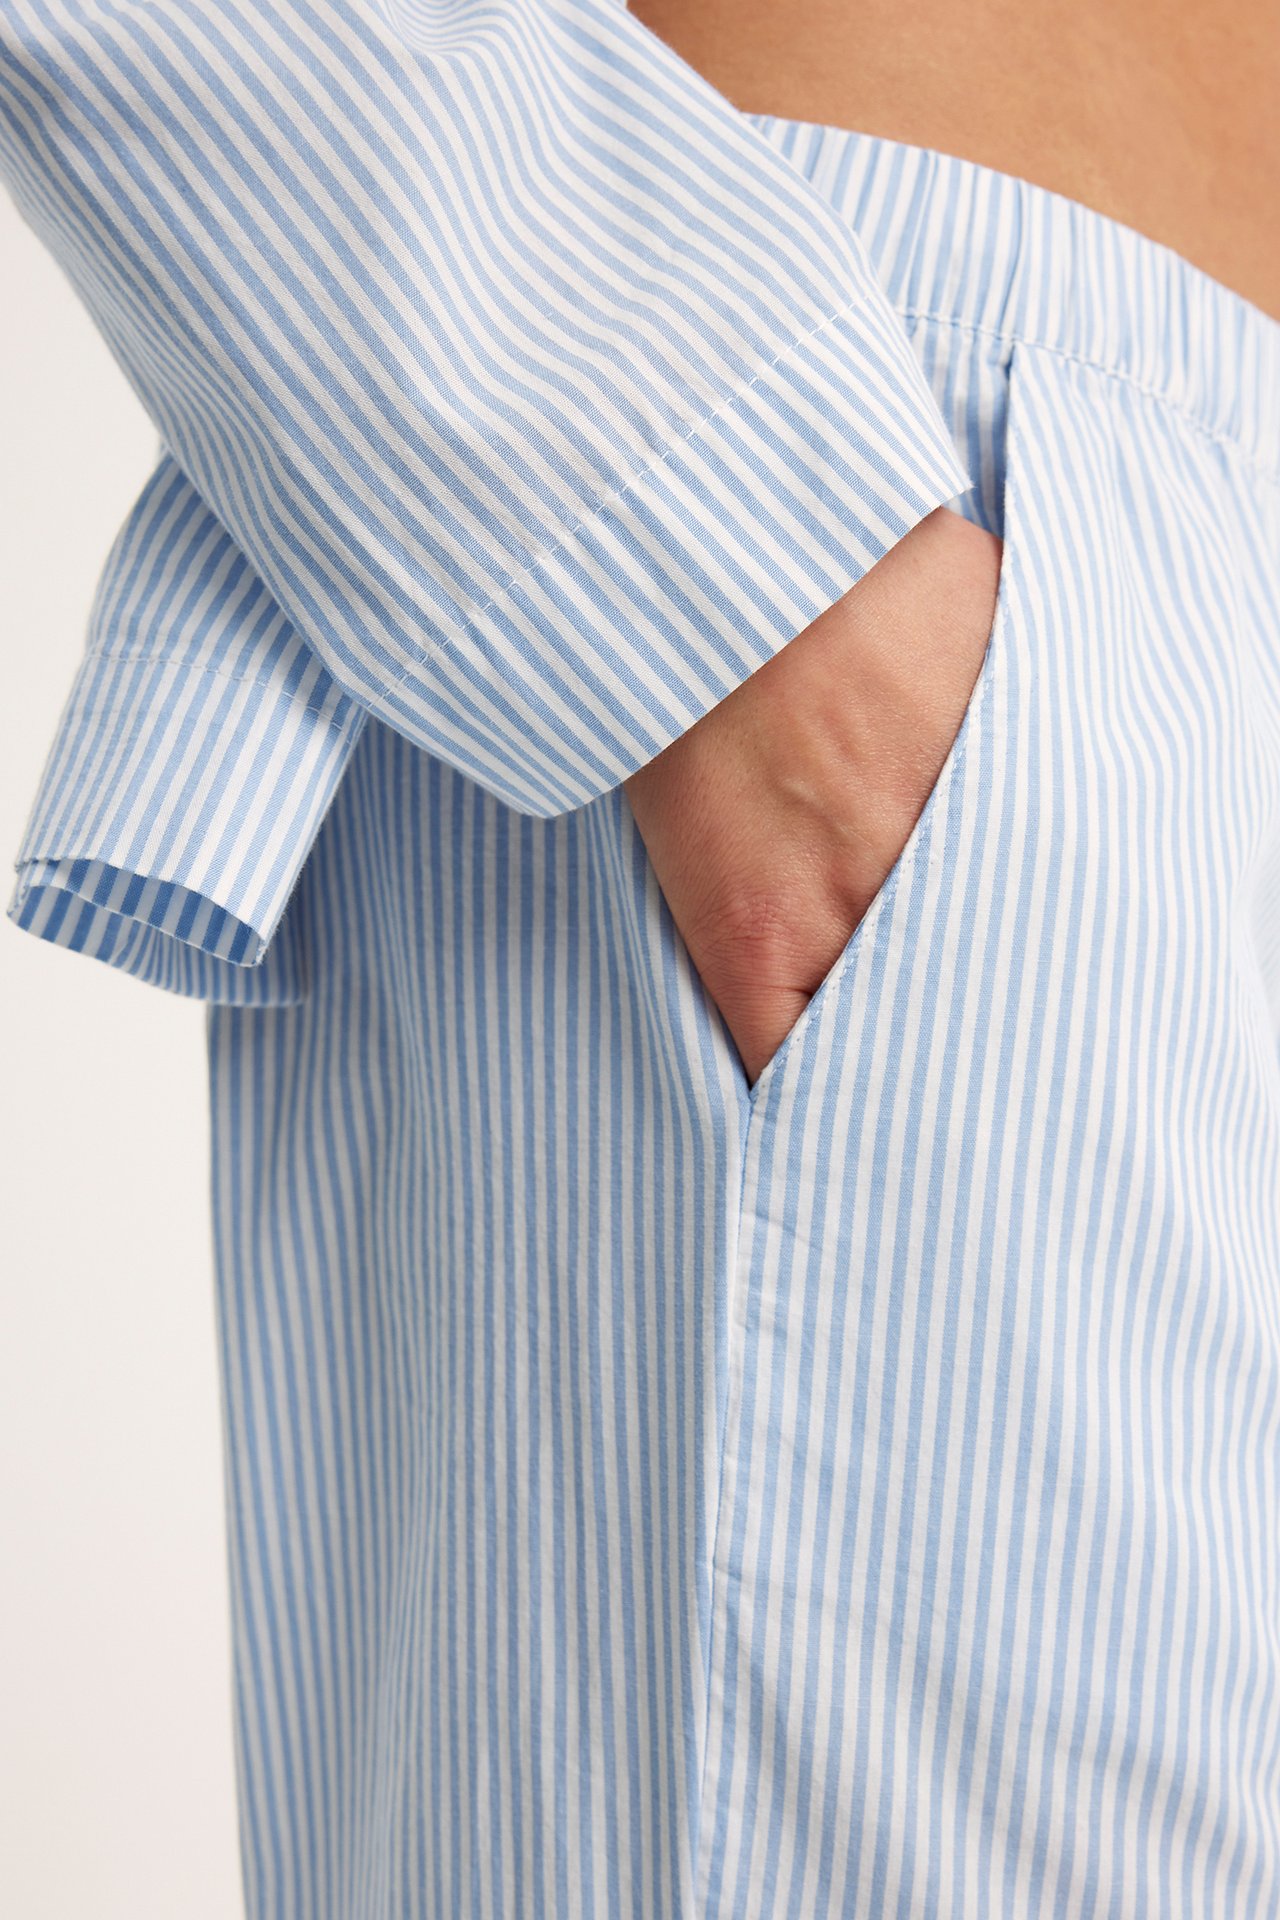 Pyjamahousut - Sininen - 178cm / Storlek: S - 4